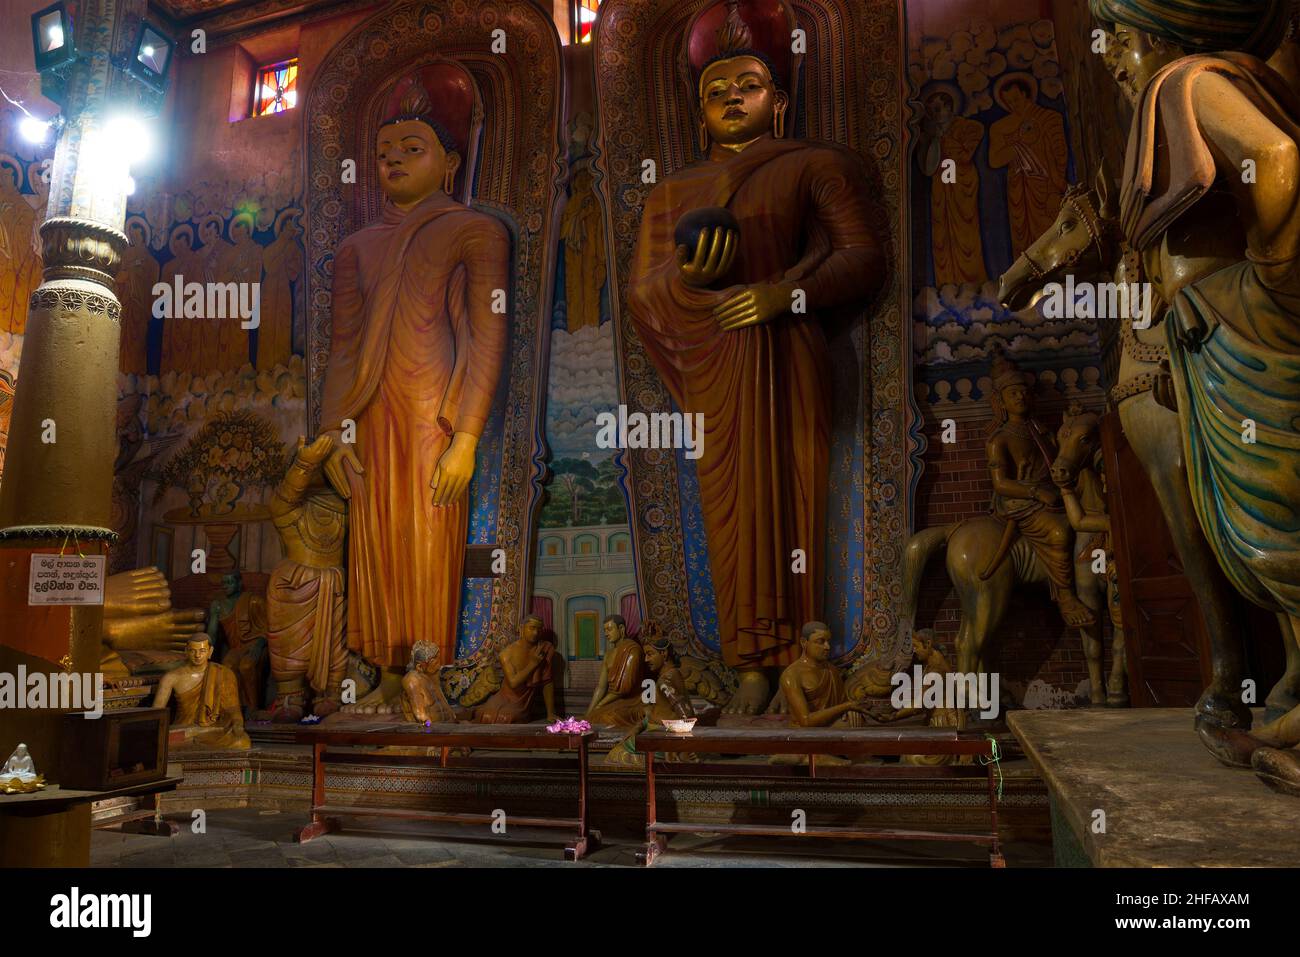 DIKWELLA, SRI LANKA - 17. FEBRUAR 2020: Im alten buddhistischen Tempel Wewrukannala Buduraja Maha Viharaya Stockfoto